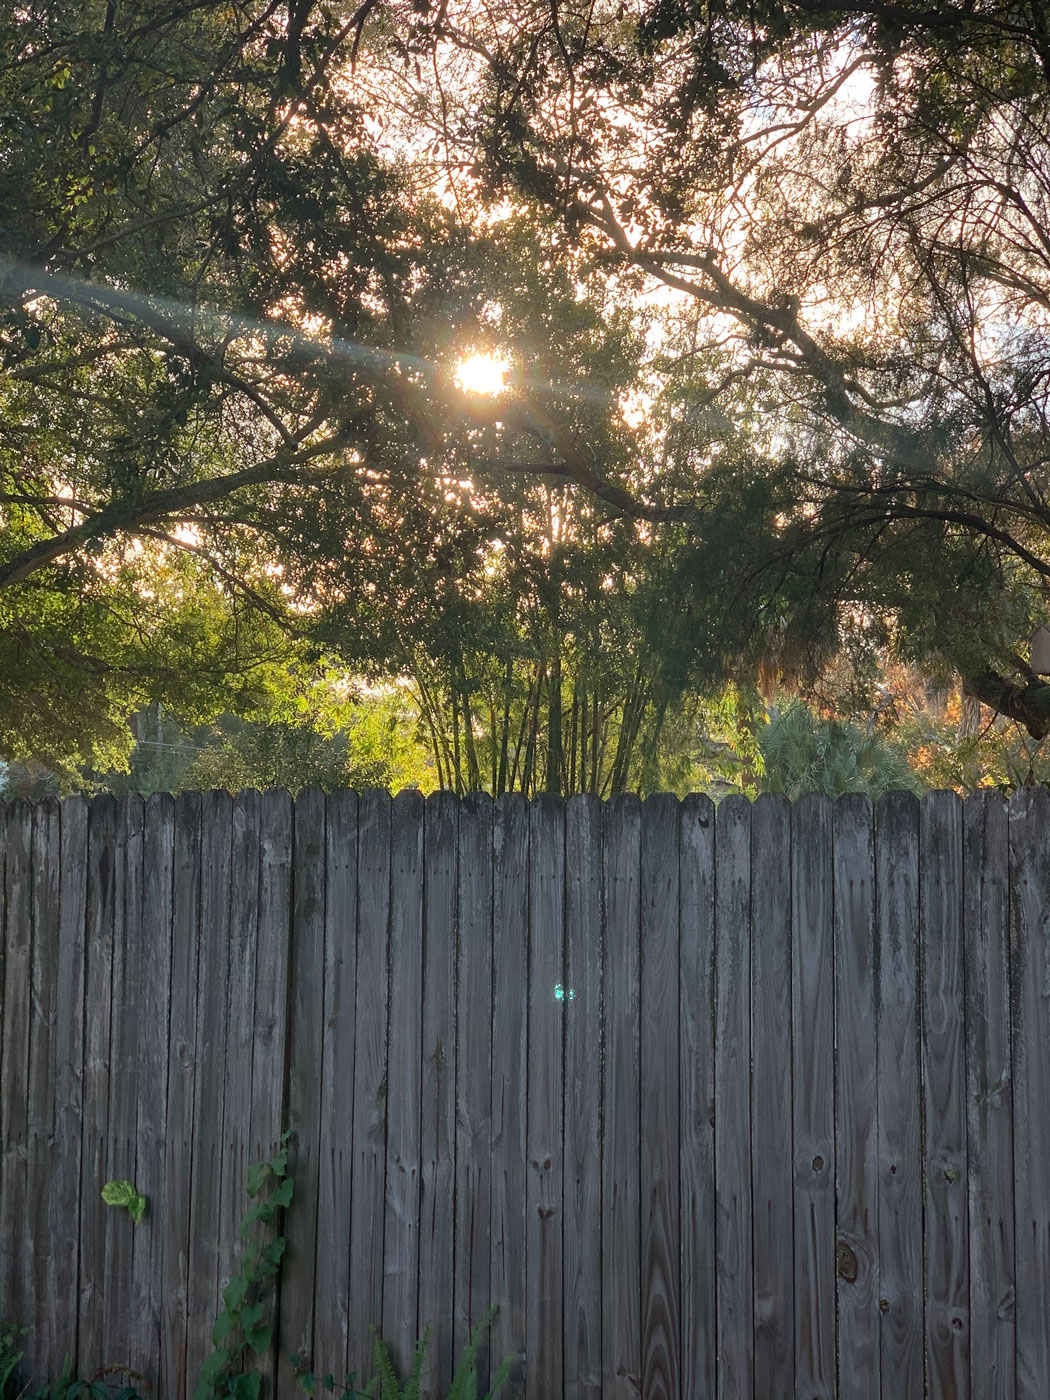 angela warren fence with sun shining